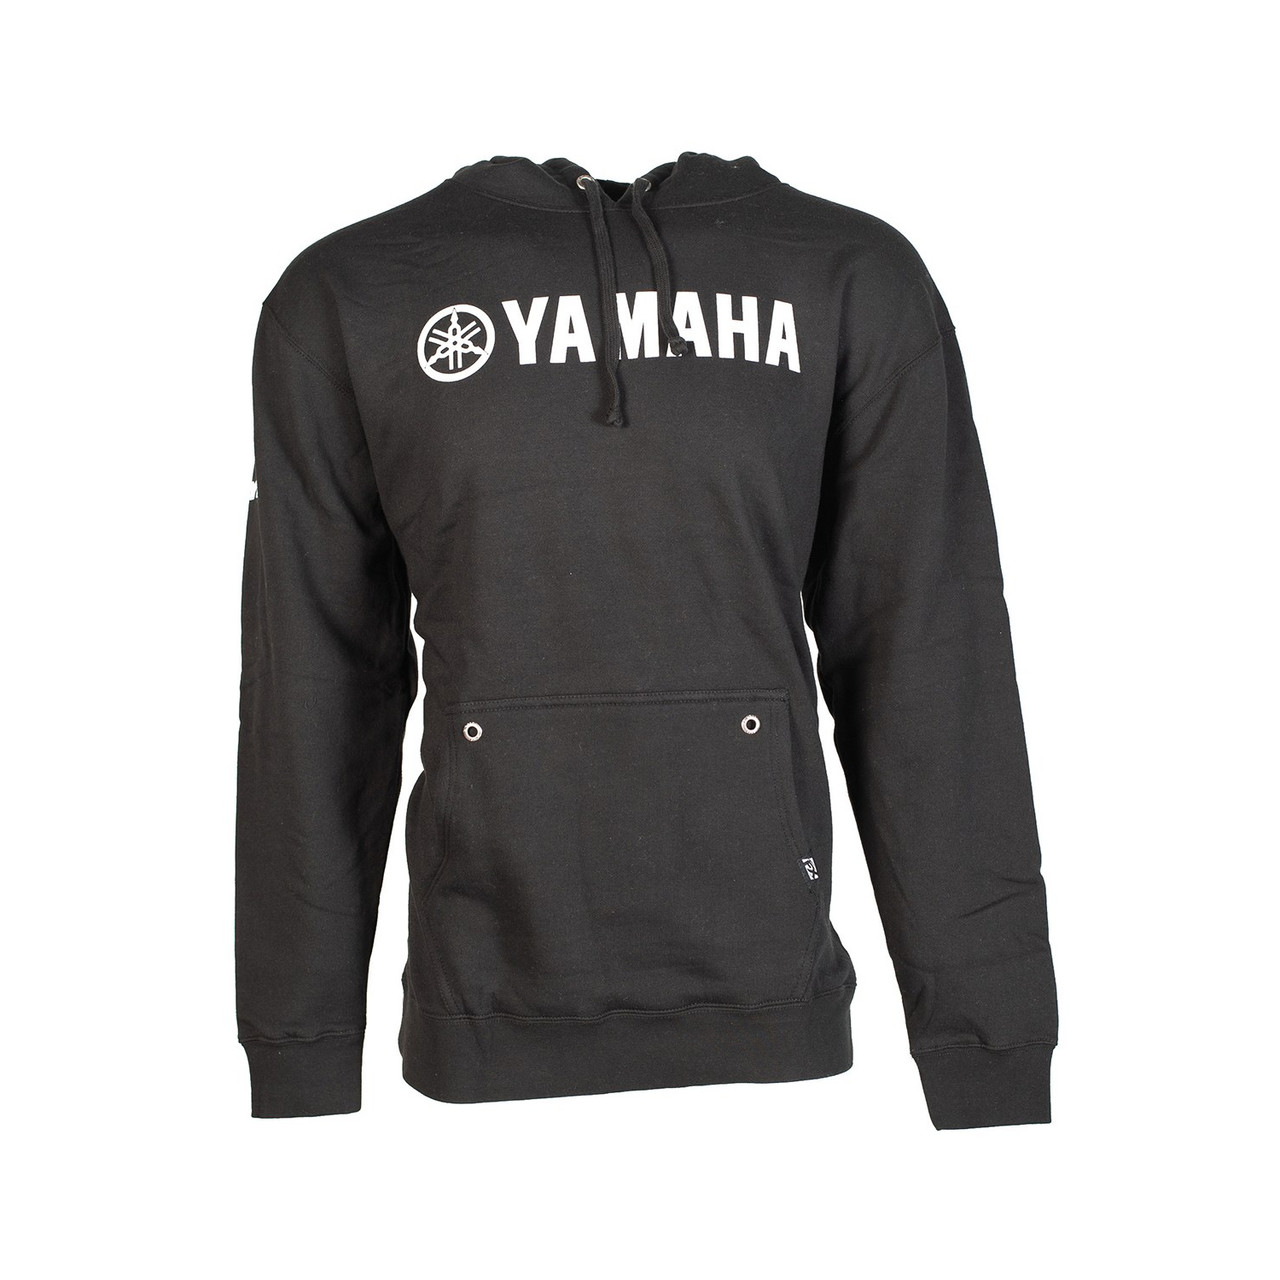 Yamaha New OEM, Factory Effex Men's Black Pullover Sweatshirt, VFE-17FTH-BK-MD